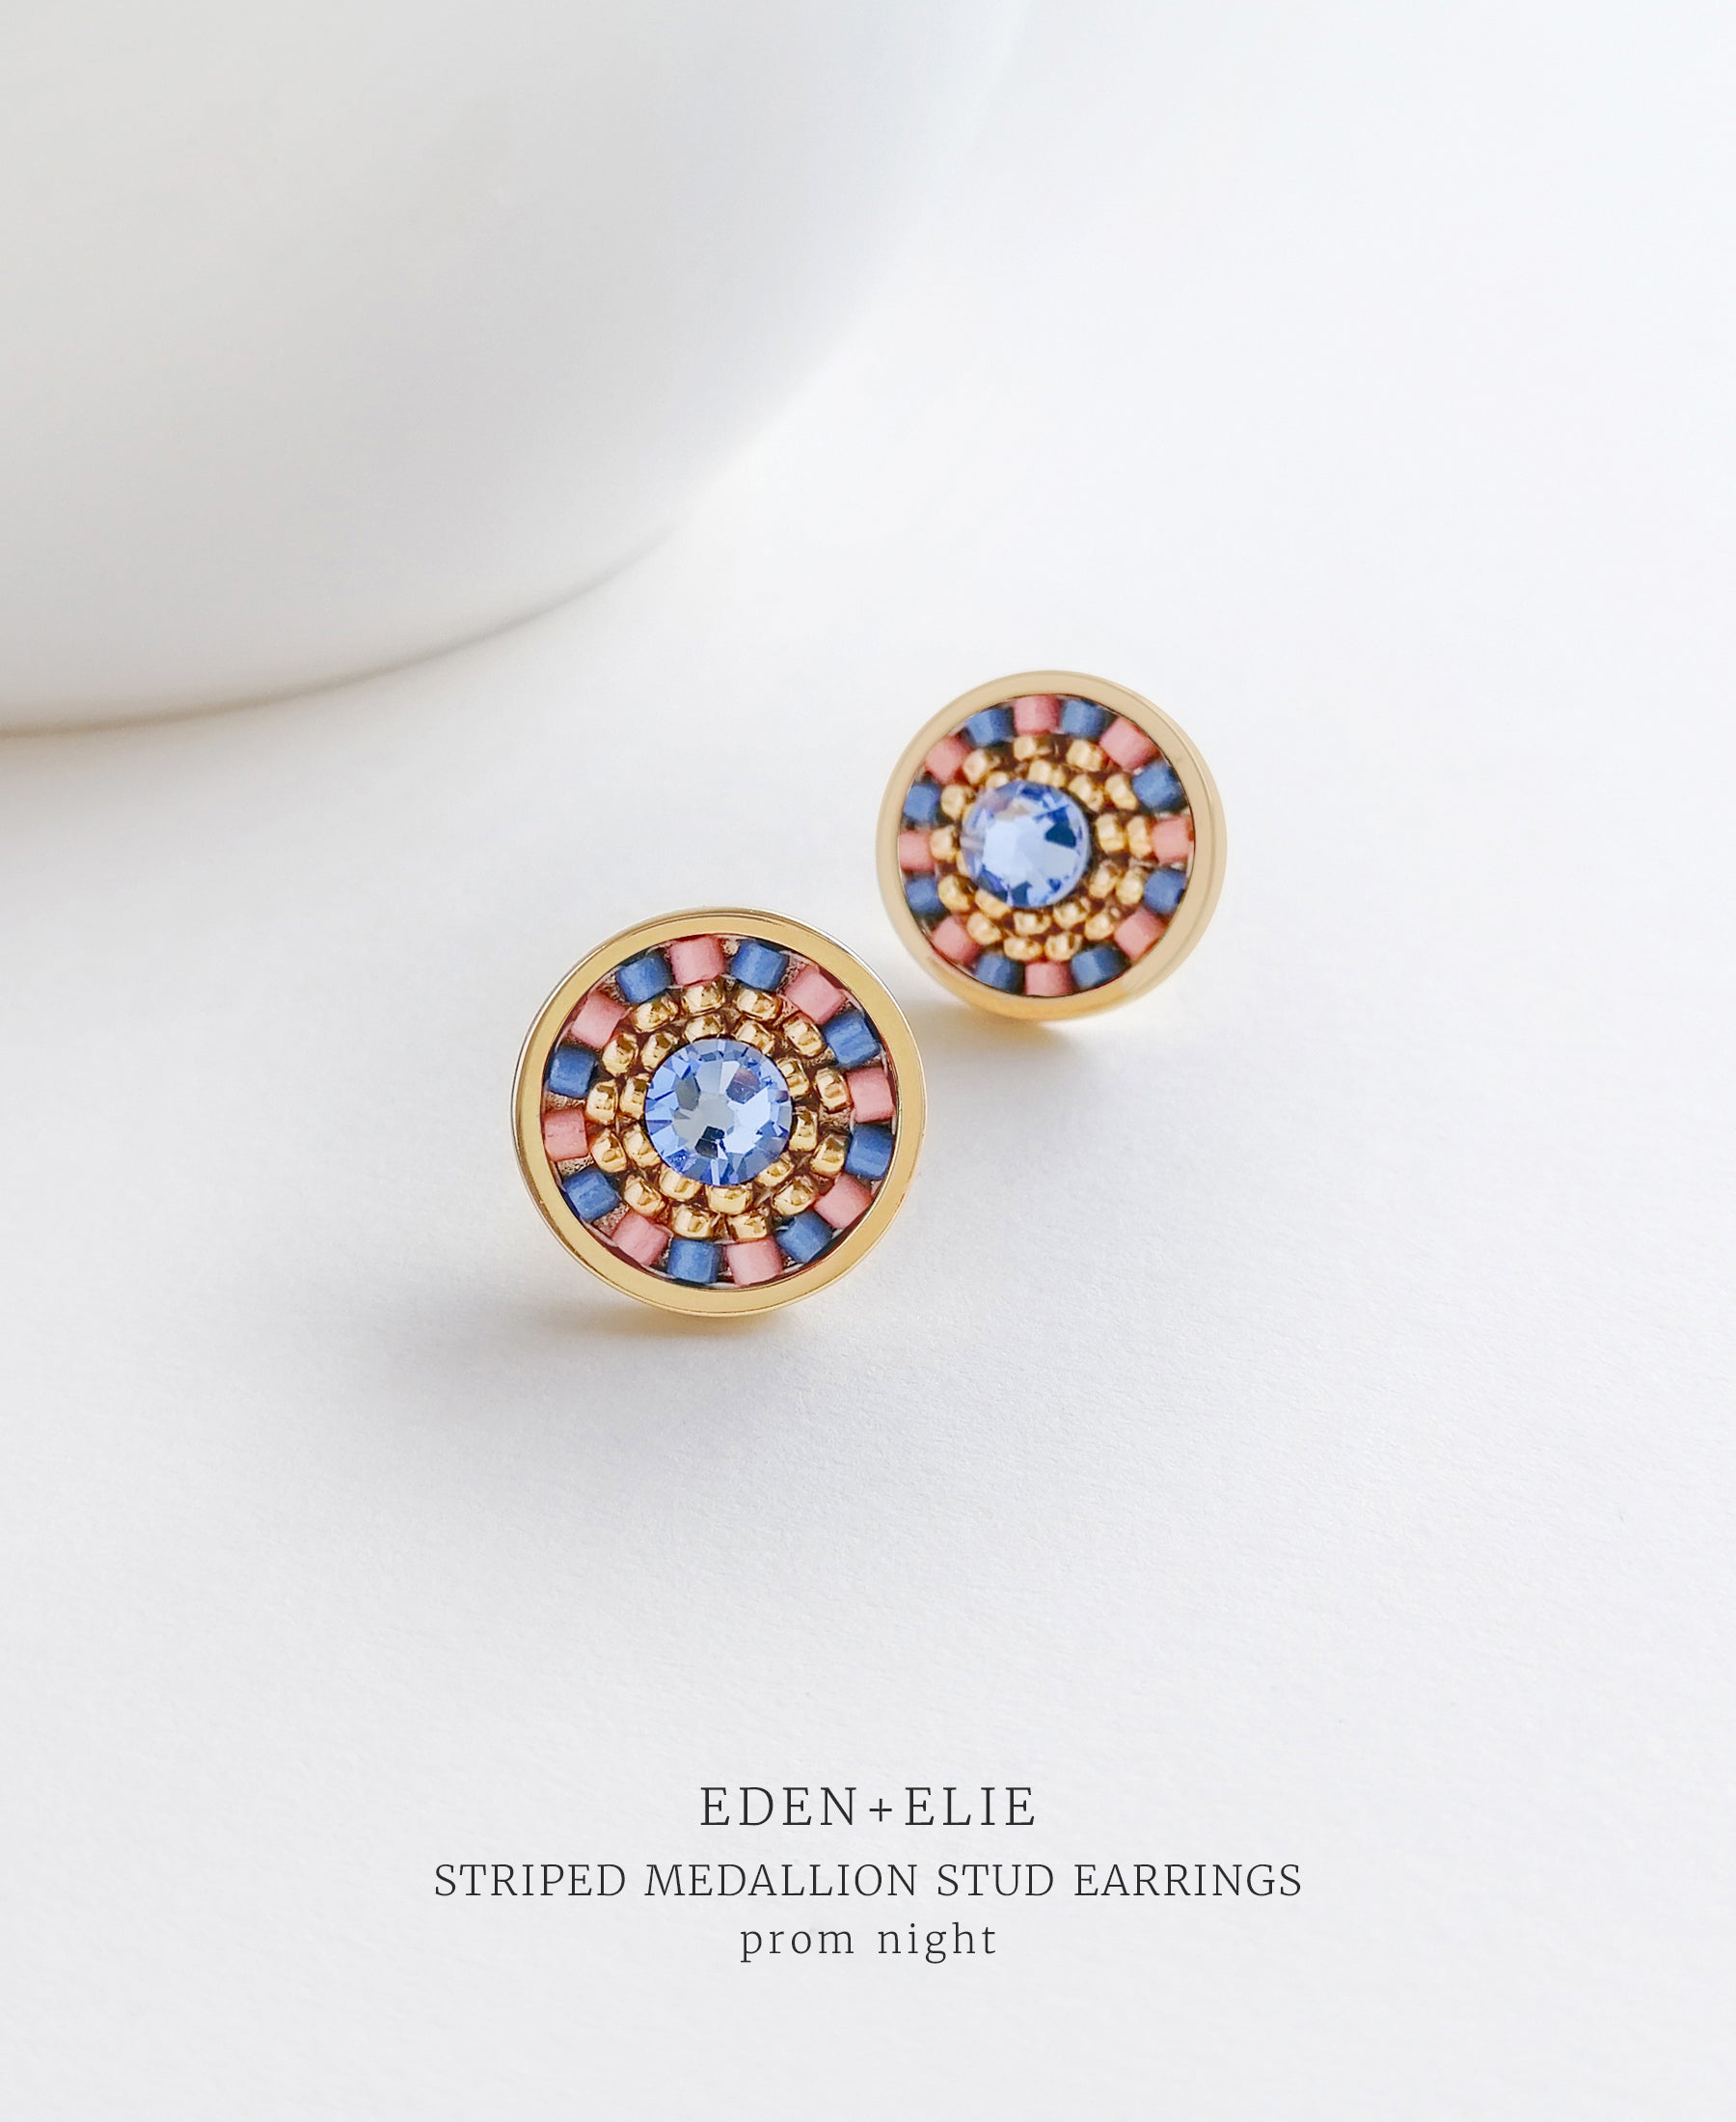 EDEN + ELIE Striped Medallion stud earrings - prom night